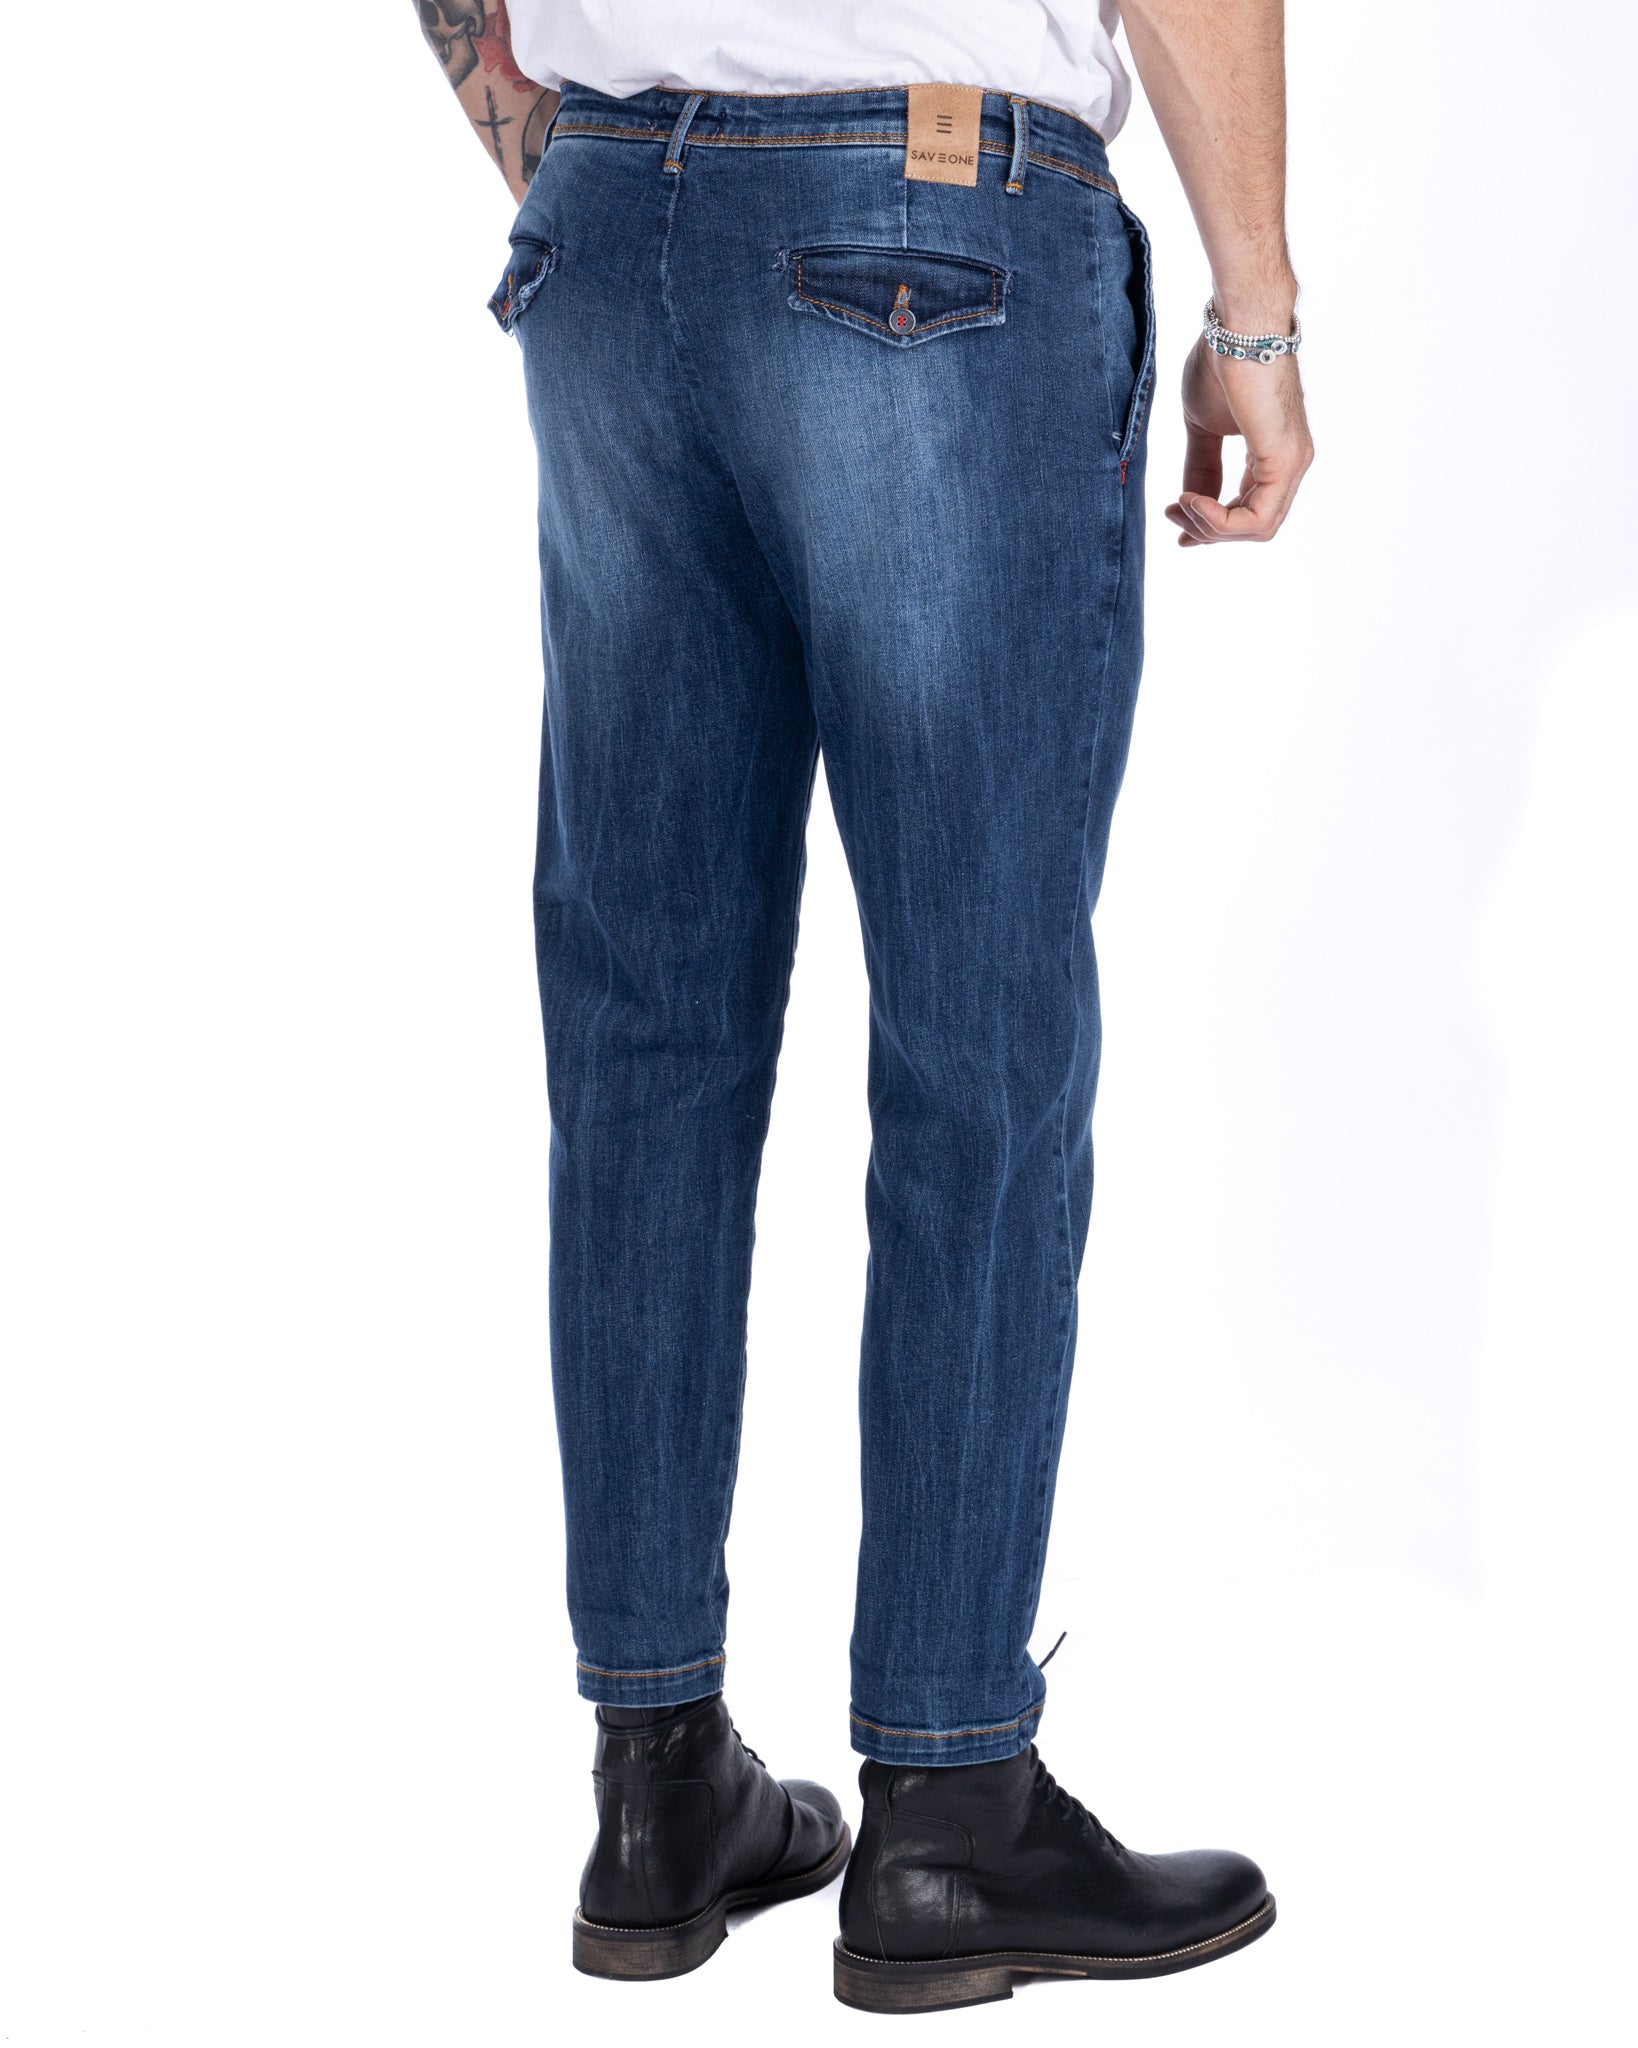 Orleans - america pocket jeans medium wash